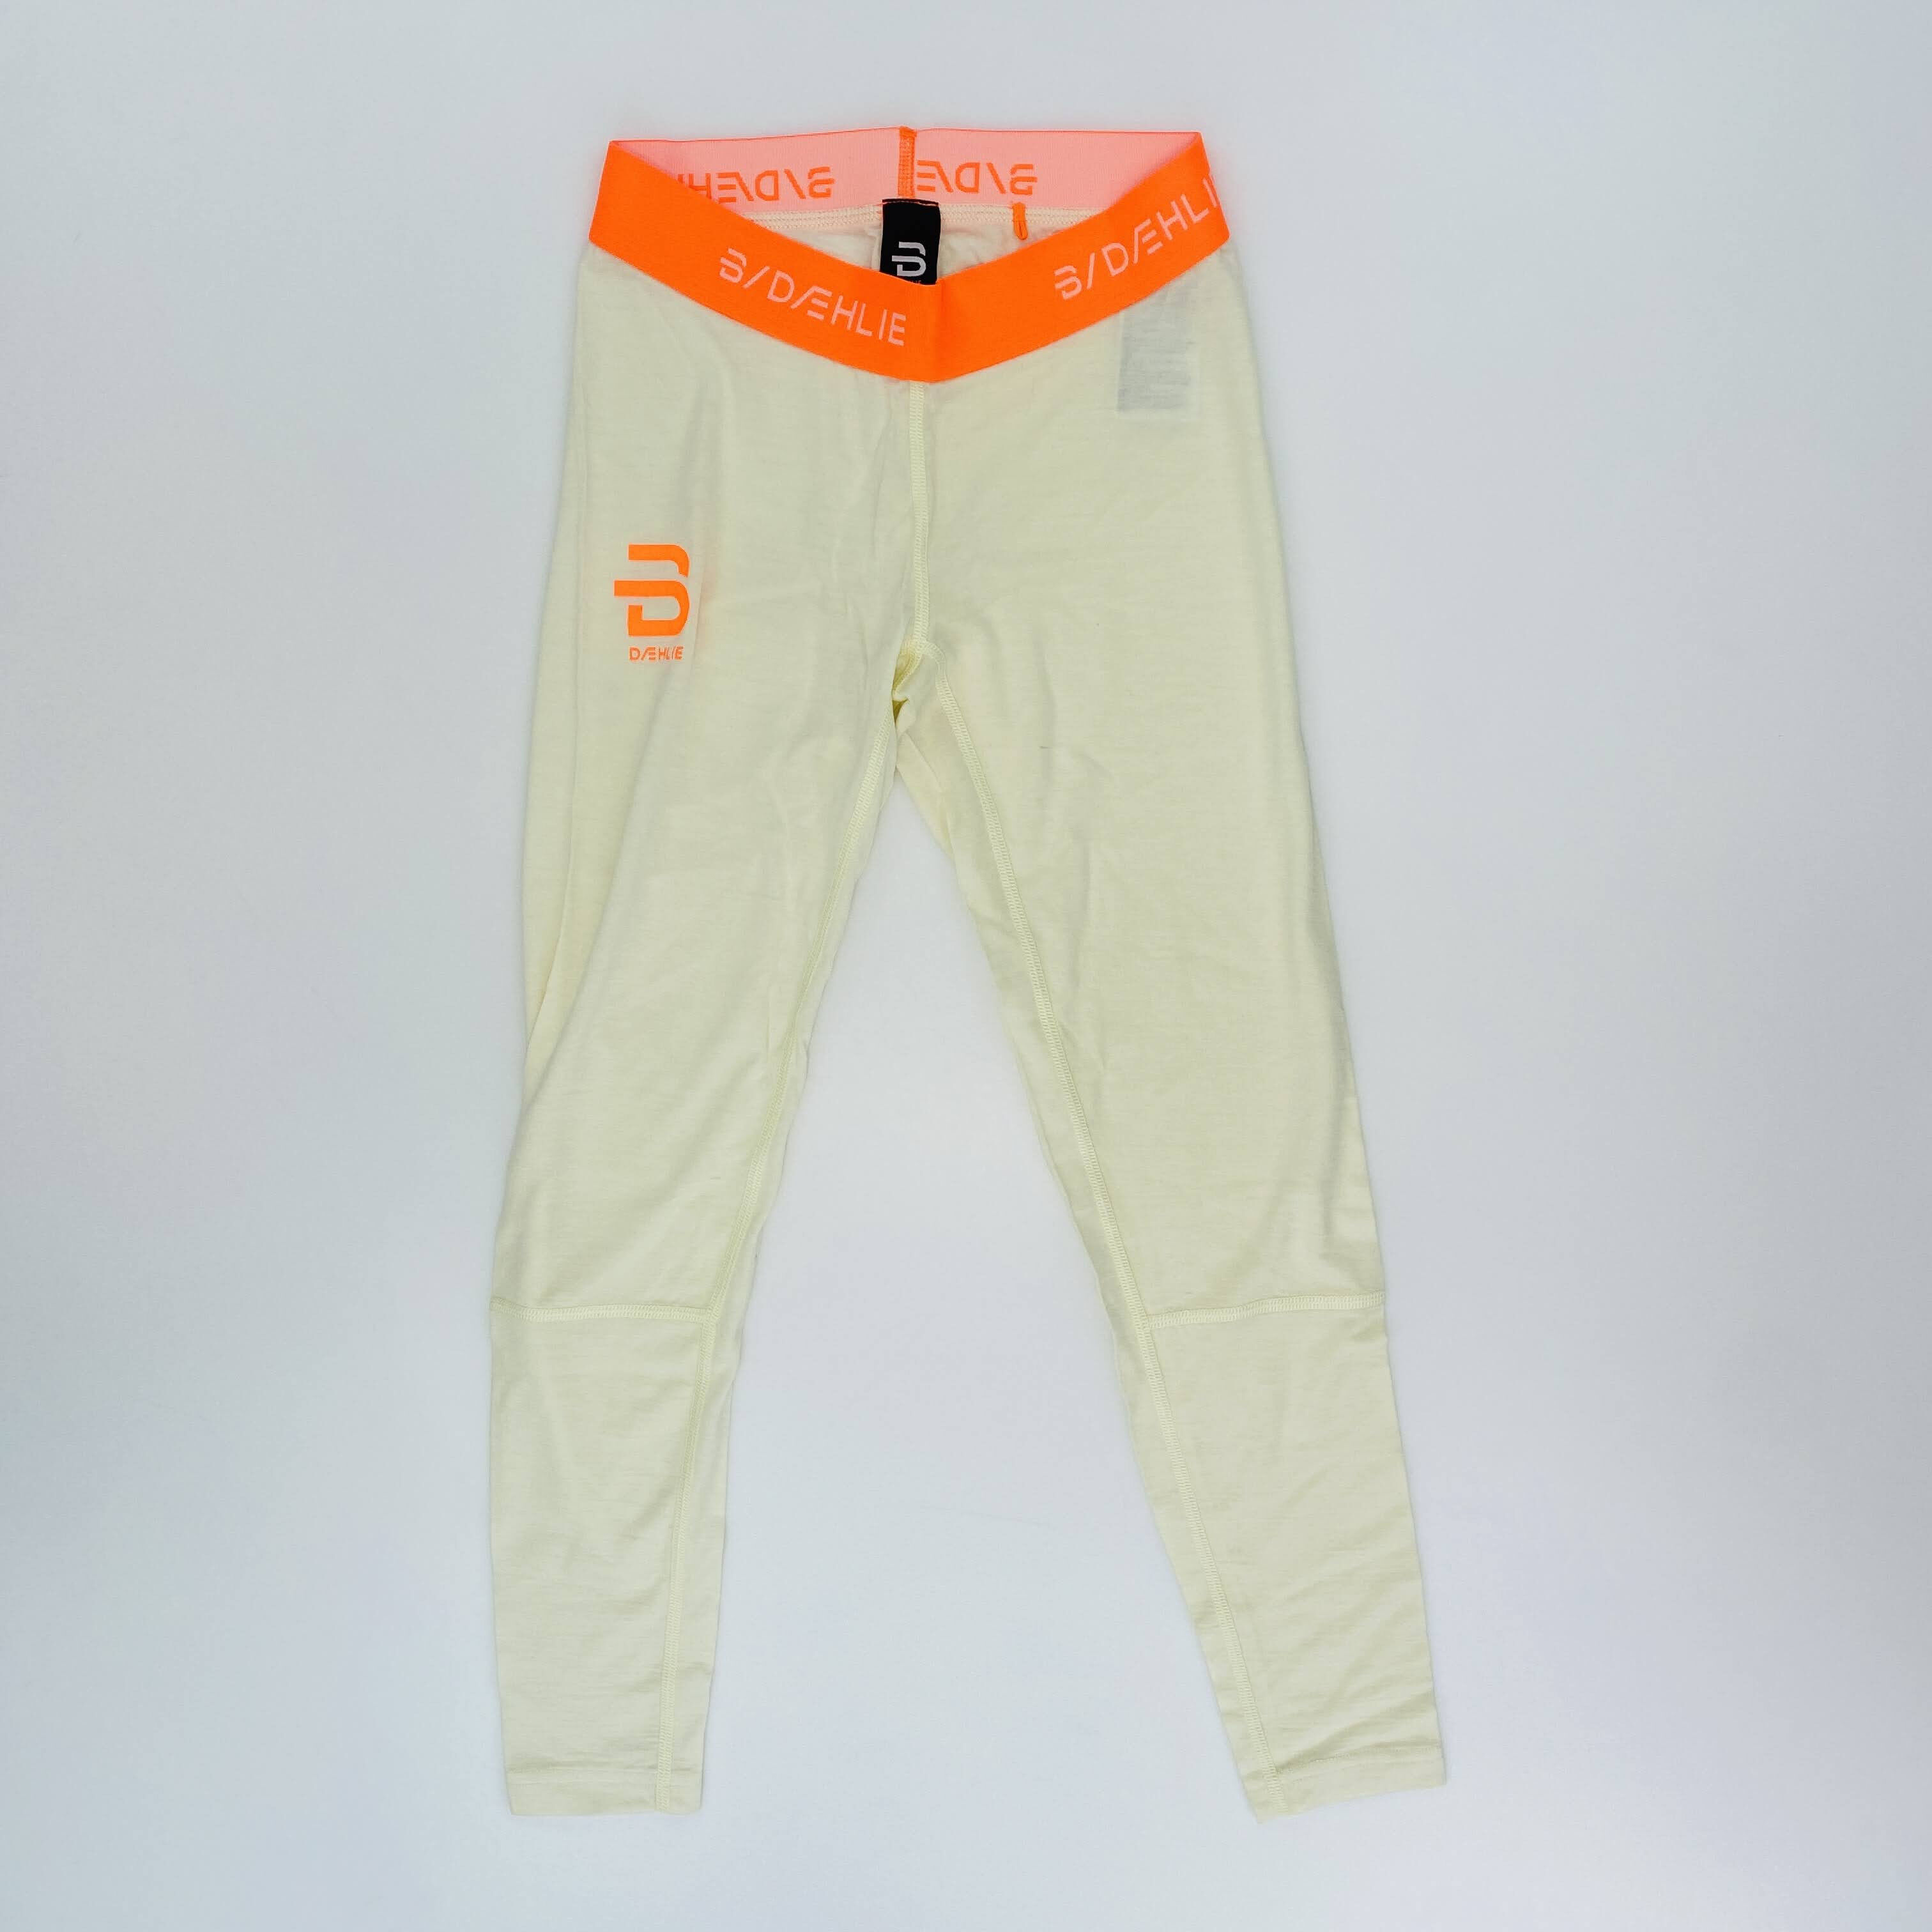 Daehlie Active Wool Pants - Pantaloni da corsa - Bambino di seconda mano - Bianco - 140 cm | Hardloop